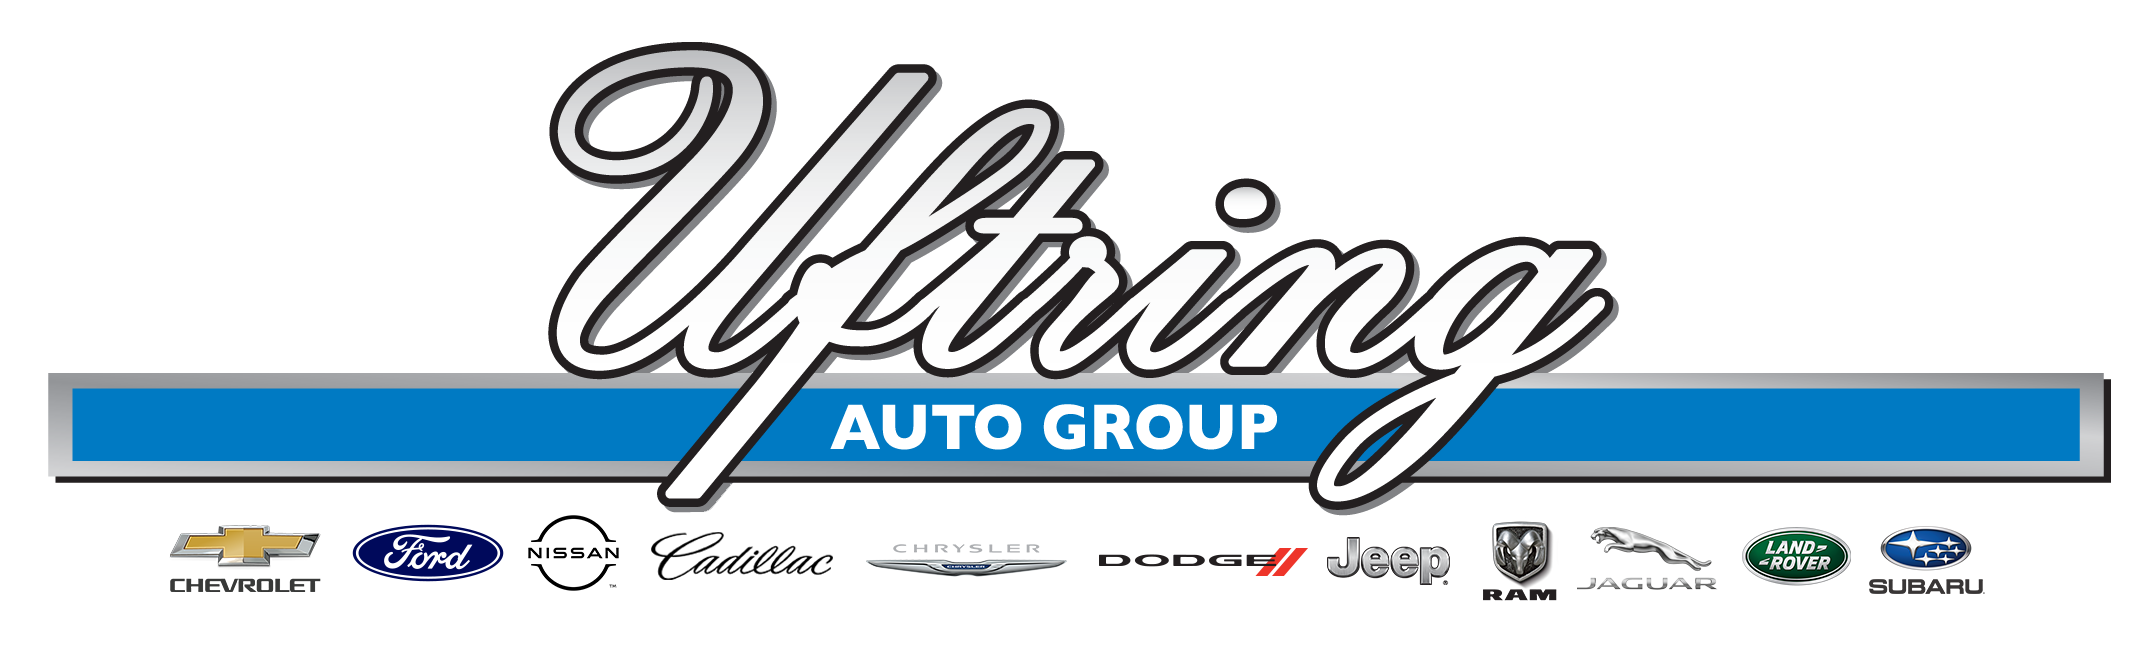 Uftring Auto Group Logo Badges 2021 copy